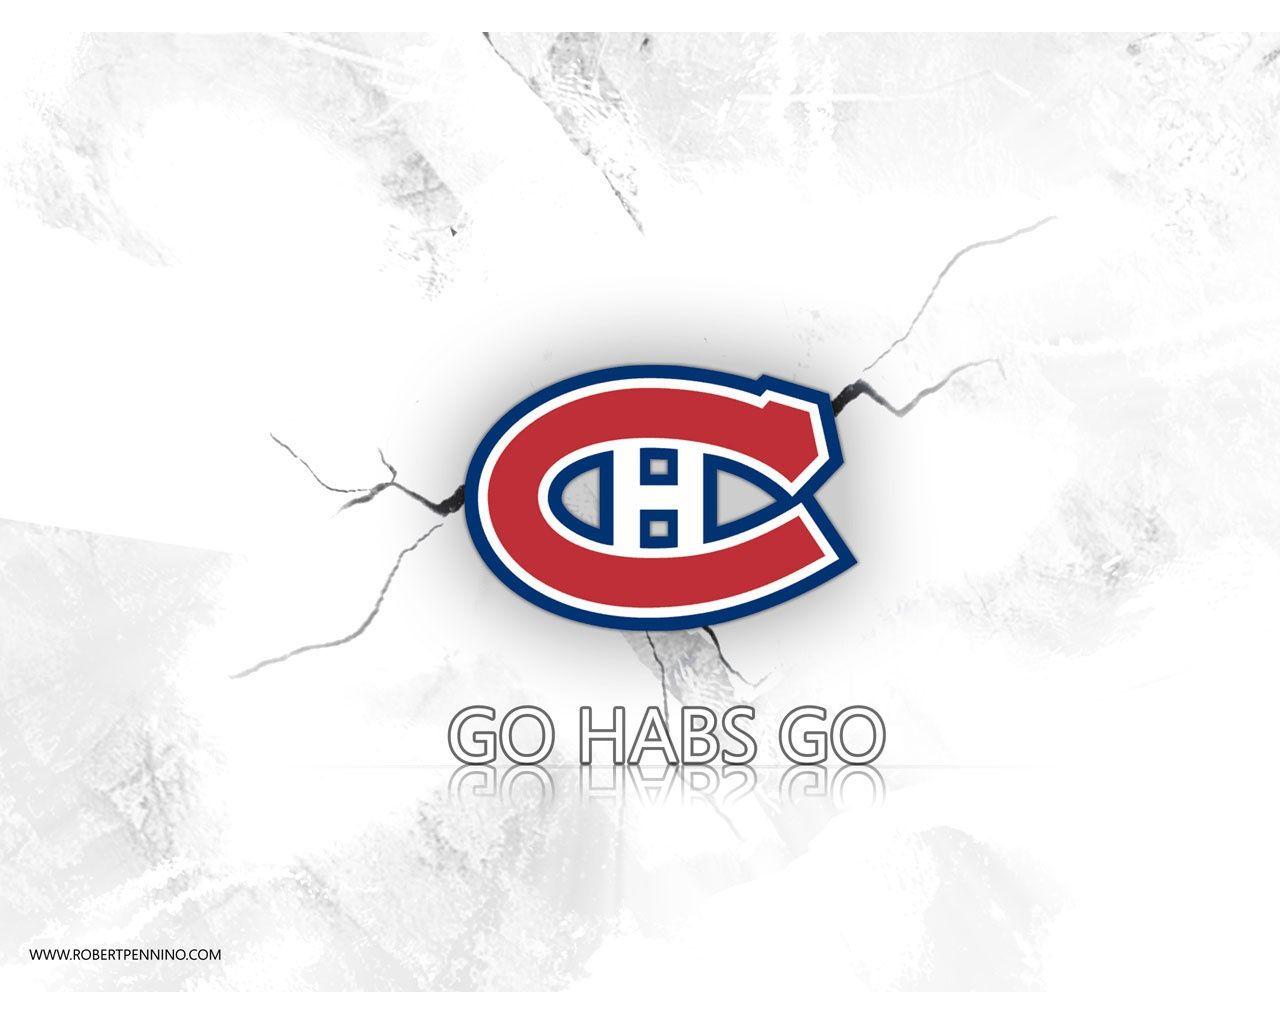 Montreal Canadiens wallpaper